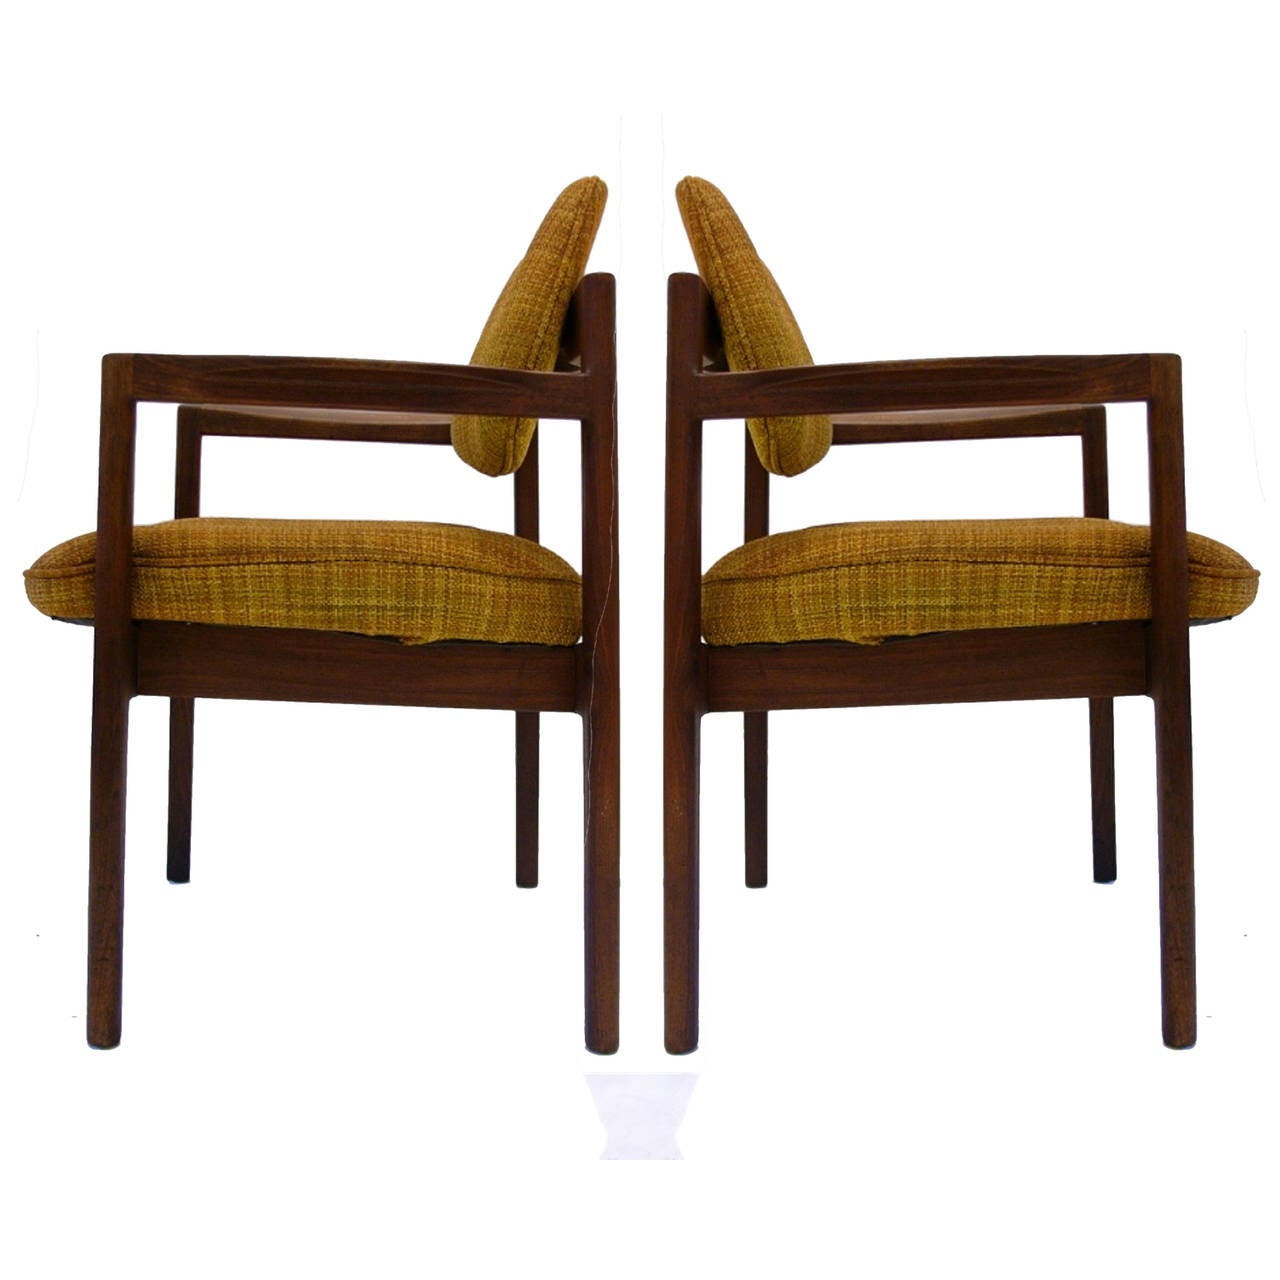 Mid-20th Century Pair of Teak Jens Risom Chairs